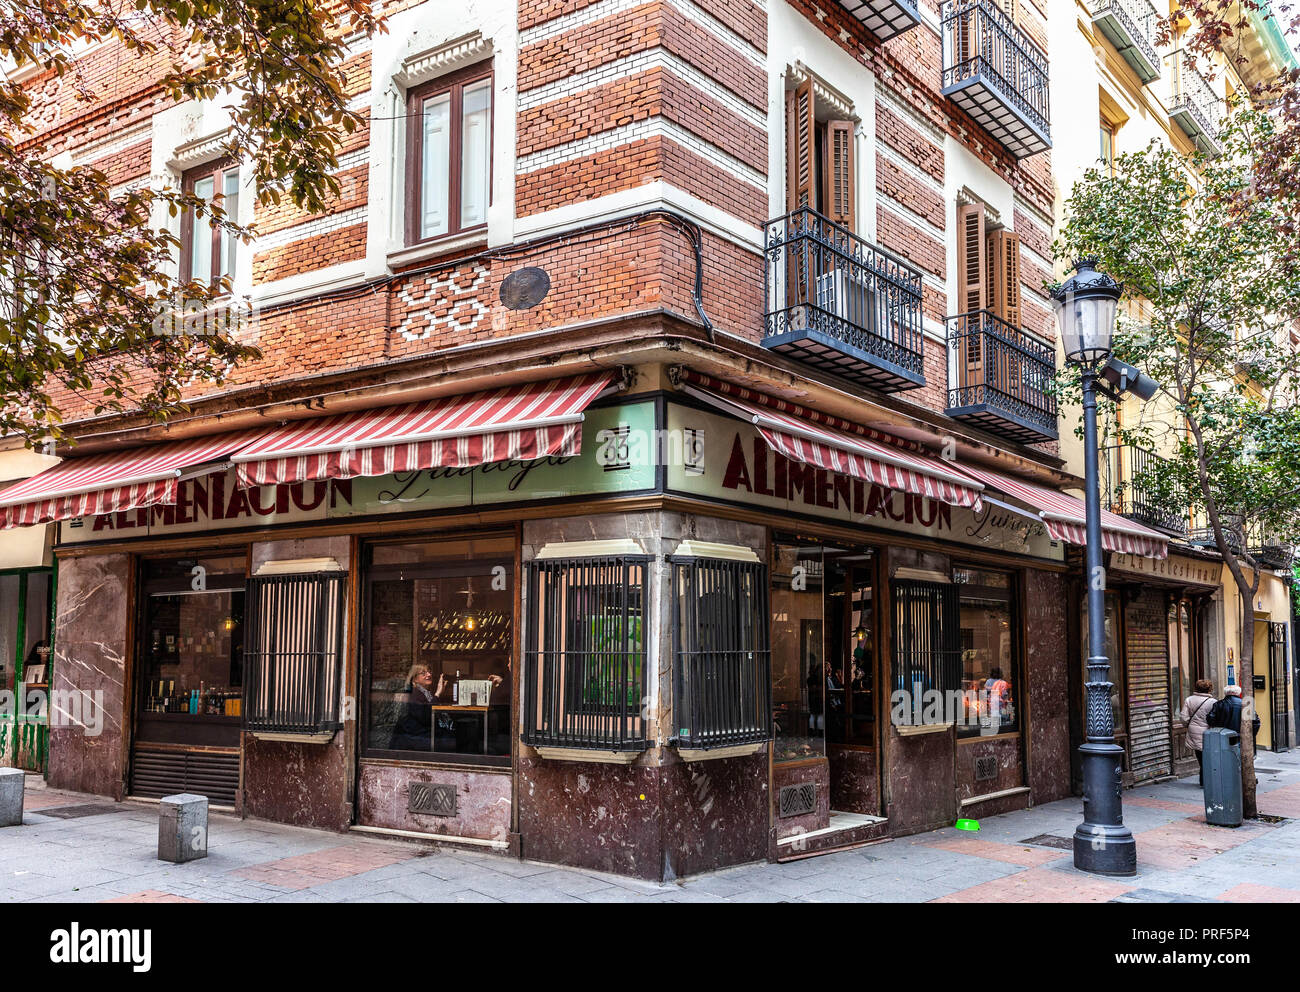 Alimentacion Quiroga restaurant, Calle Huertas, barrio de Las Letras, Madrid, Spain. Stock Photo